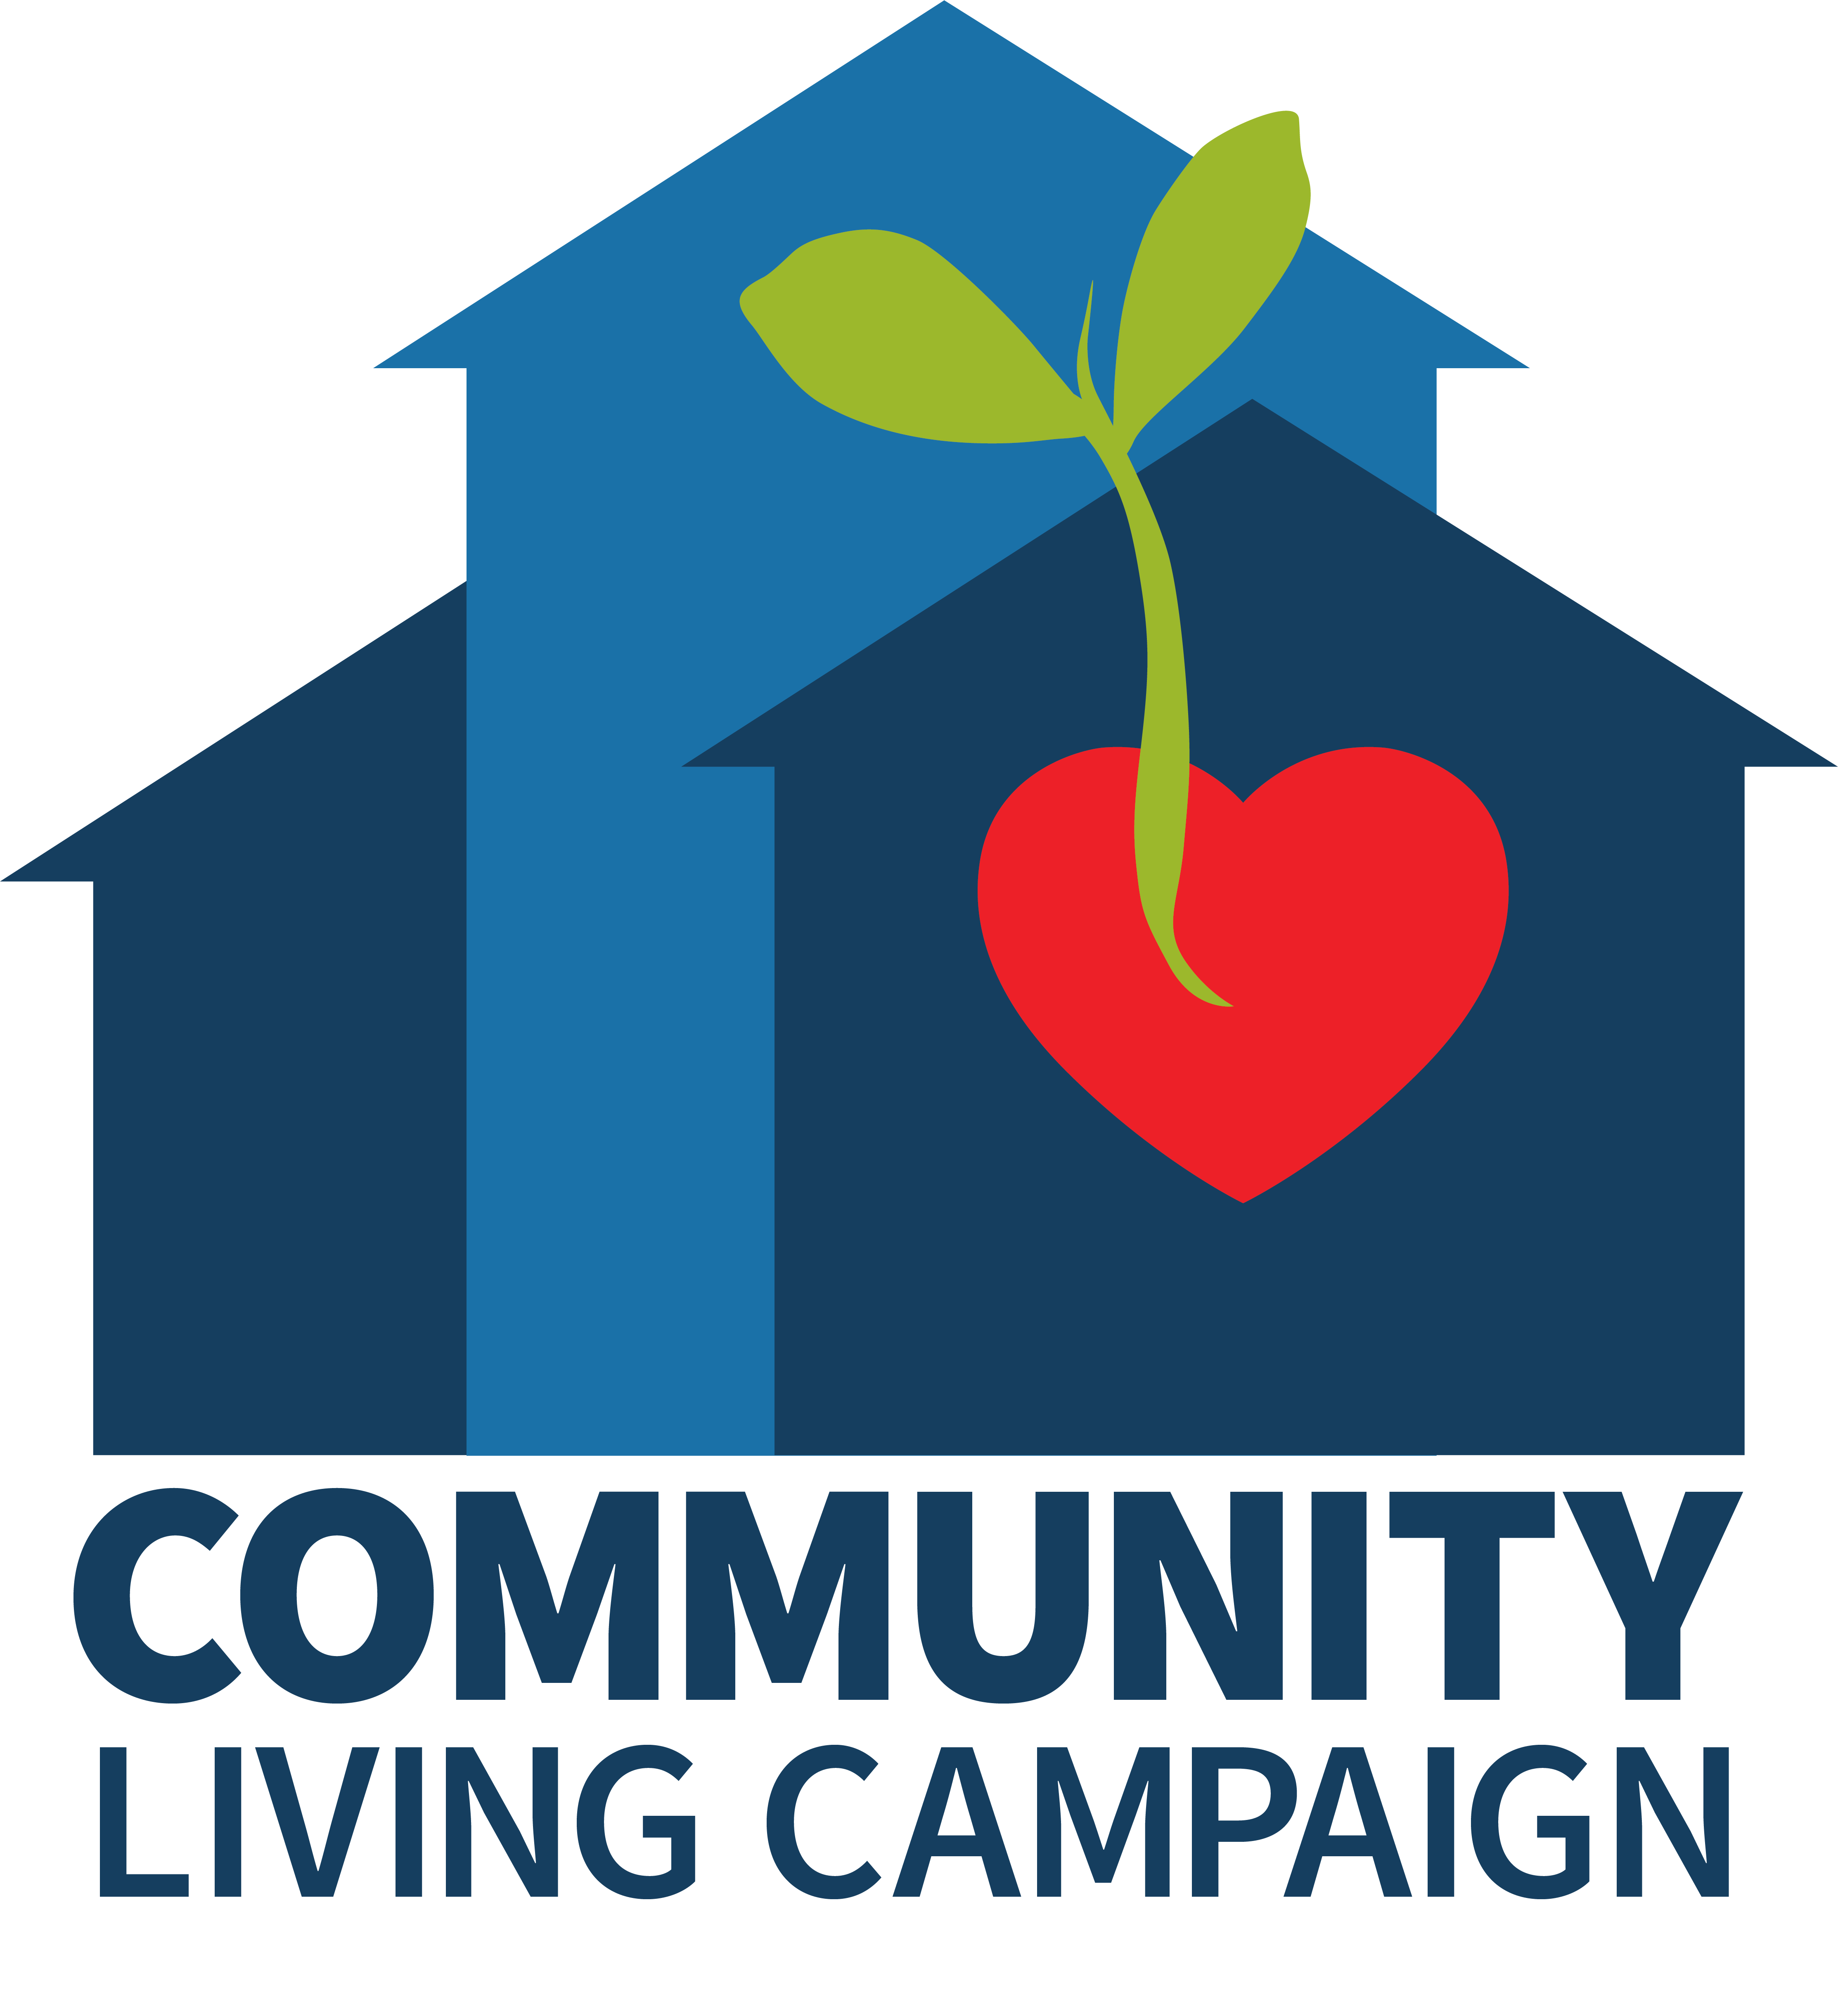 Community Living Campaign logo